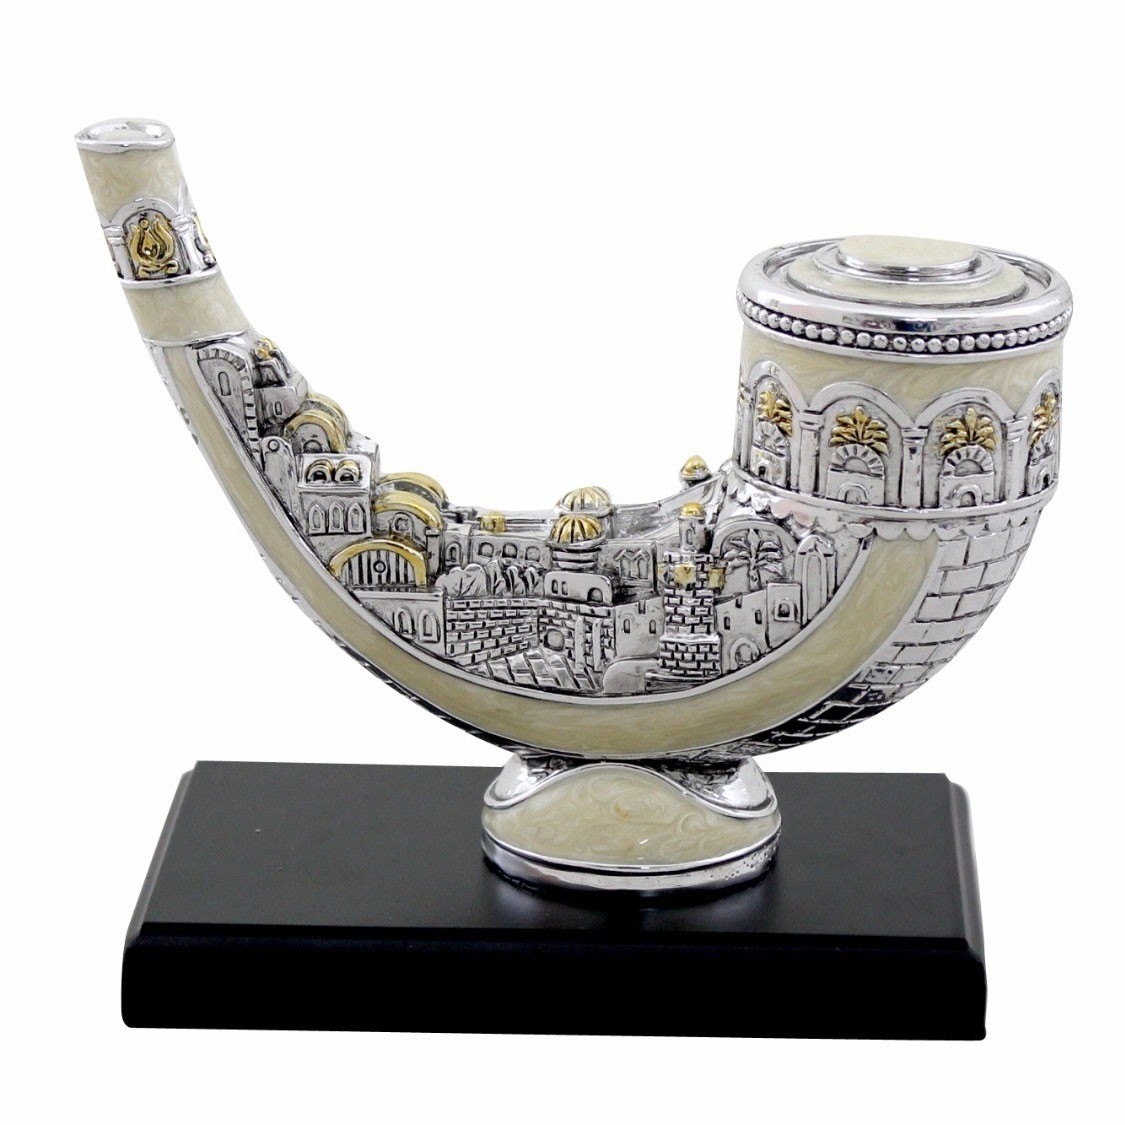 Silver Plated and Enamel Shofar Miniature Figurine with Jerusalem Design - 1